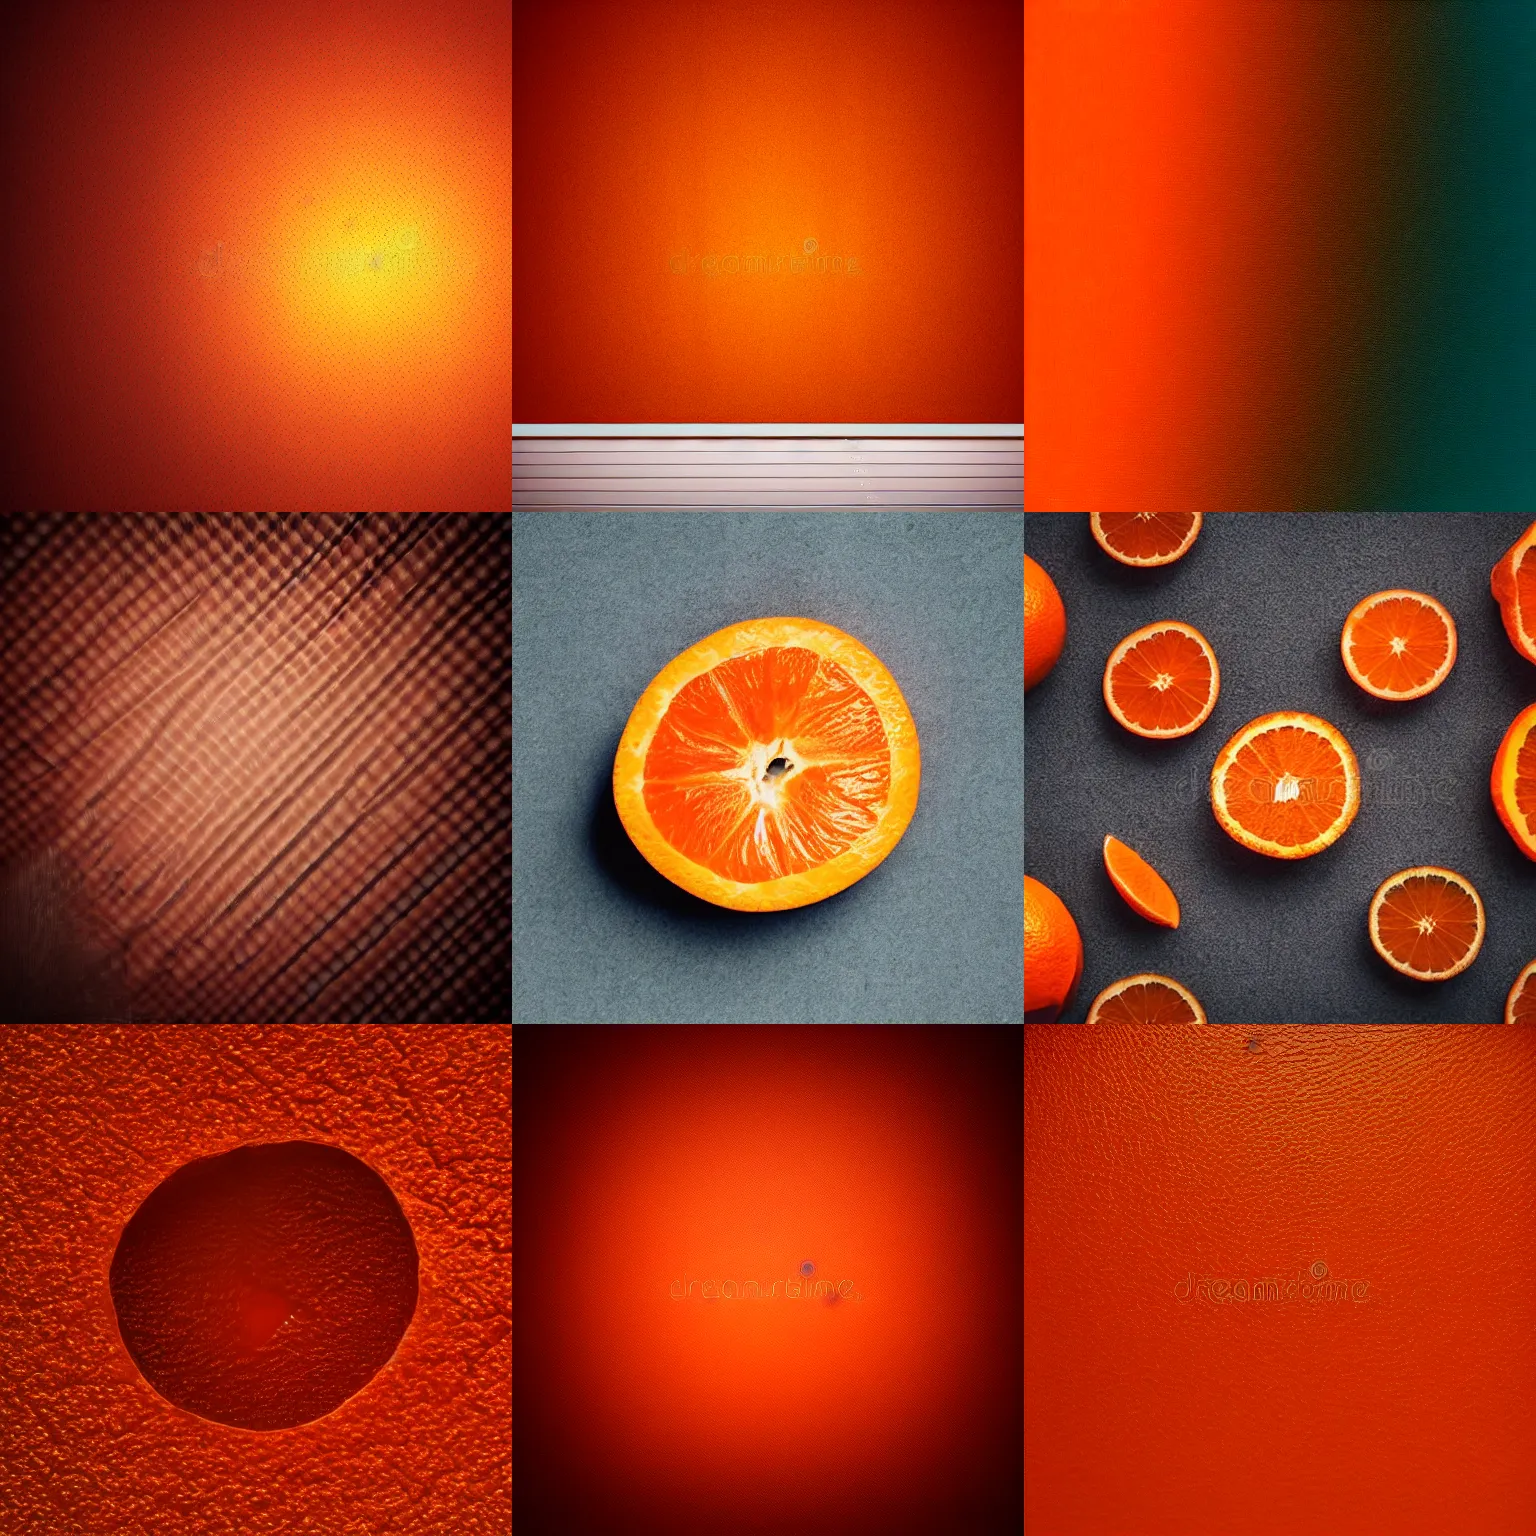 Prompt: inside of orange, high quality stock photo texture, softbox studio lighting, high contrast